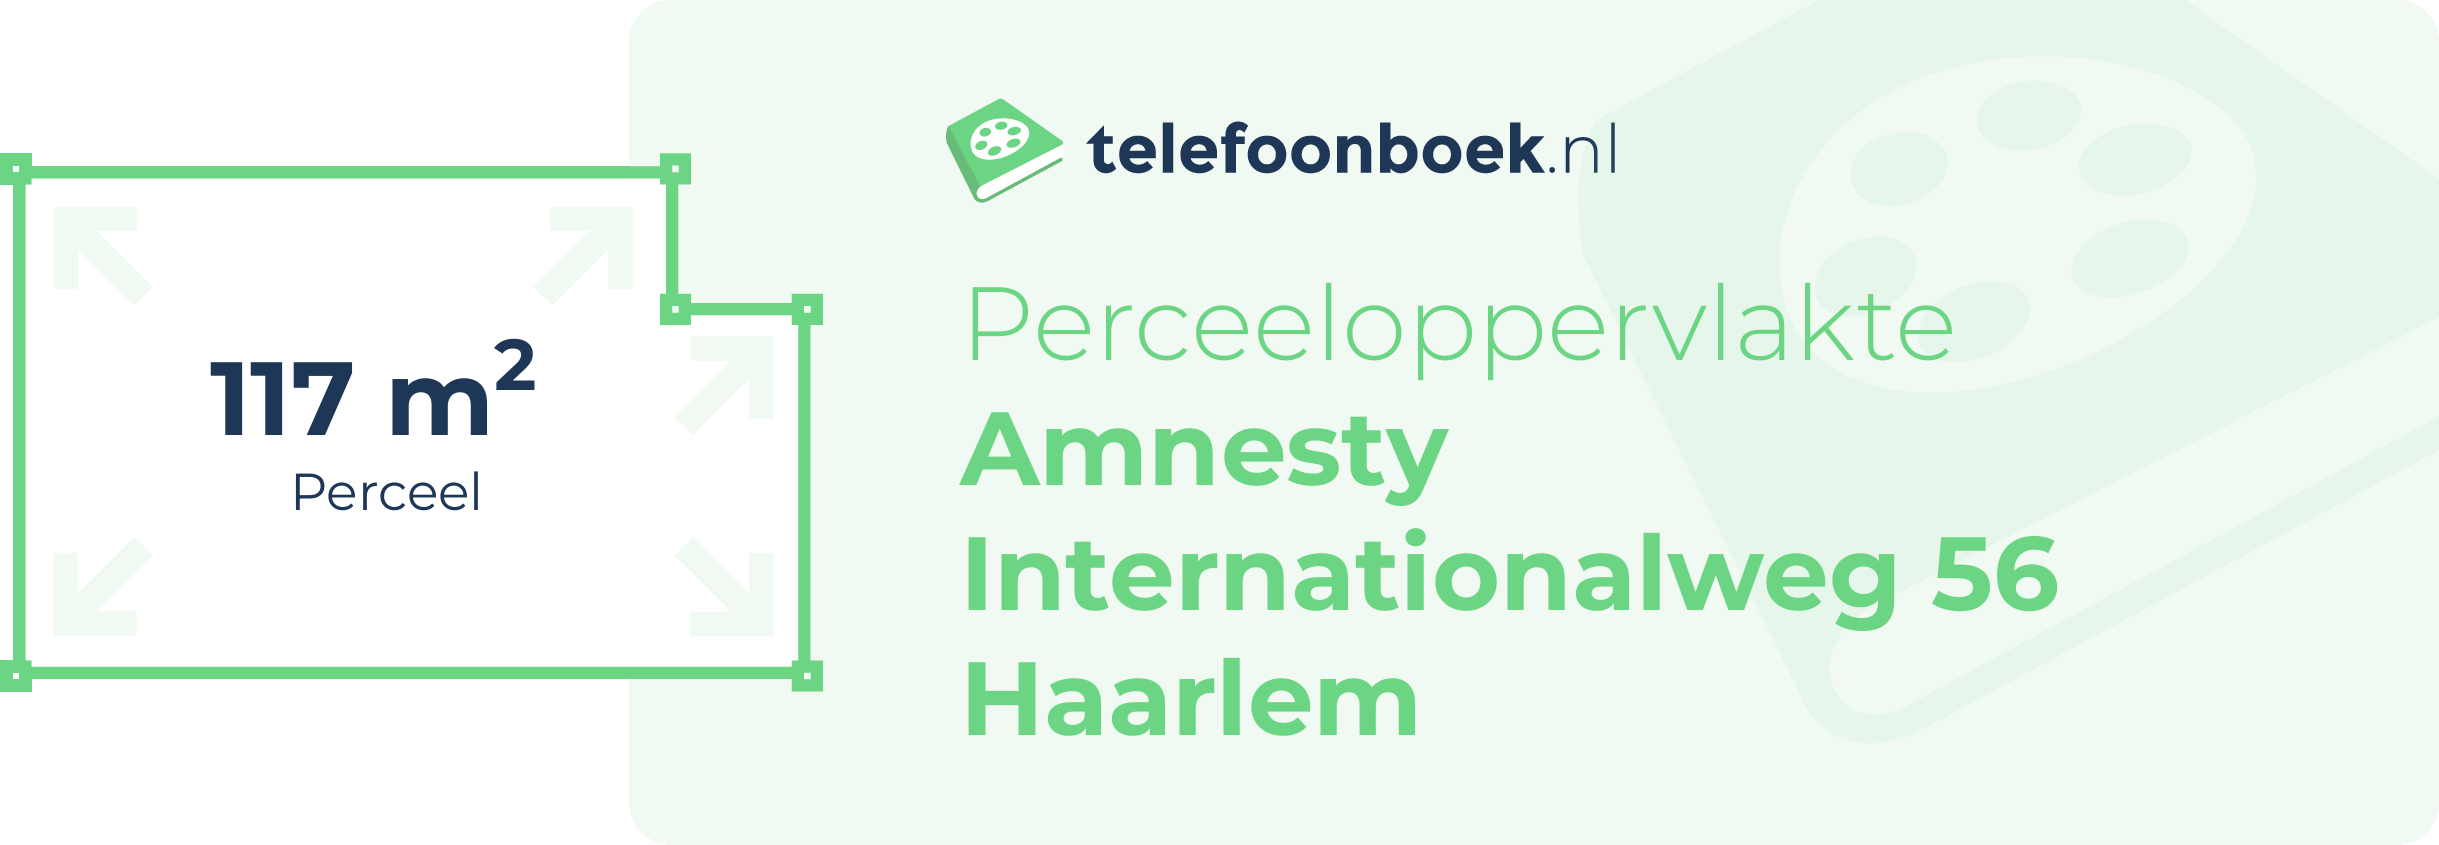 Perceeloppervlakte Amnesty Internationalweg 56 Haarlem